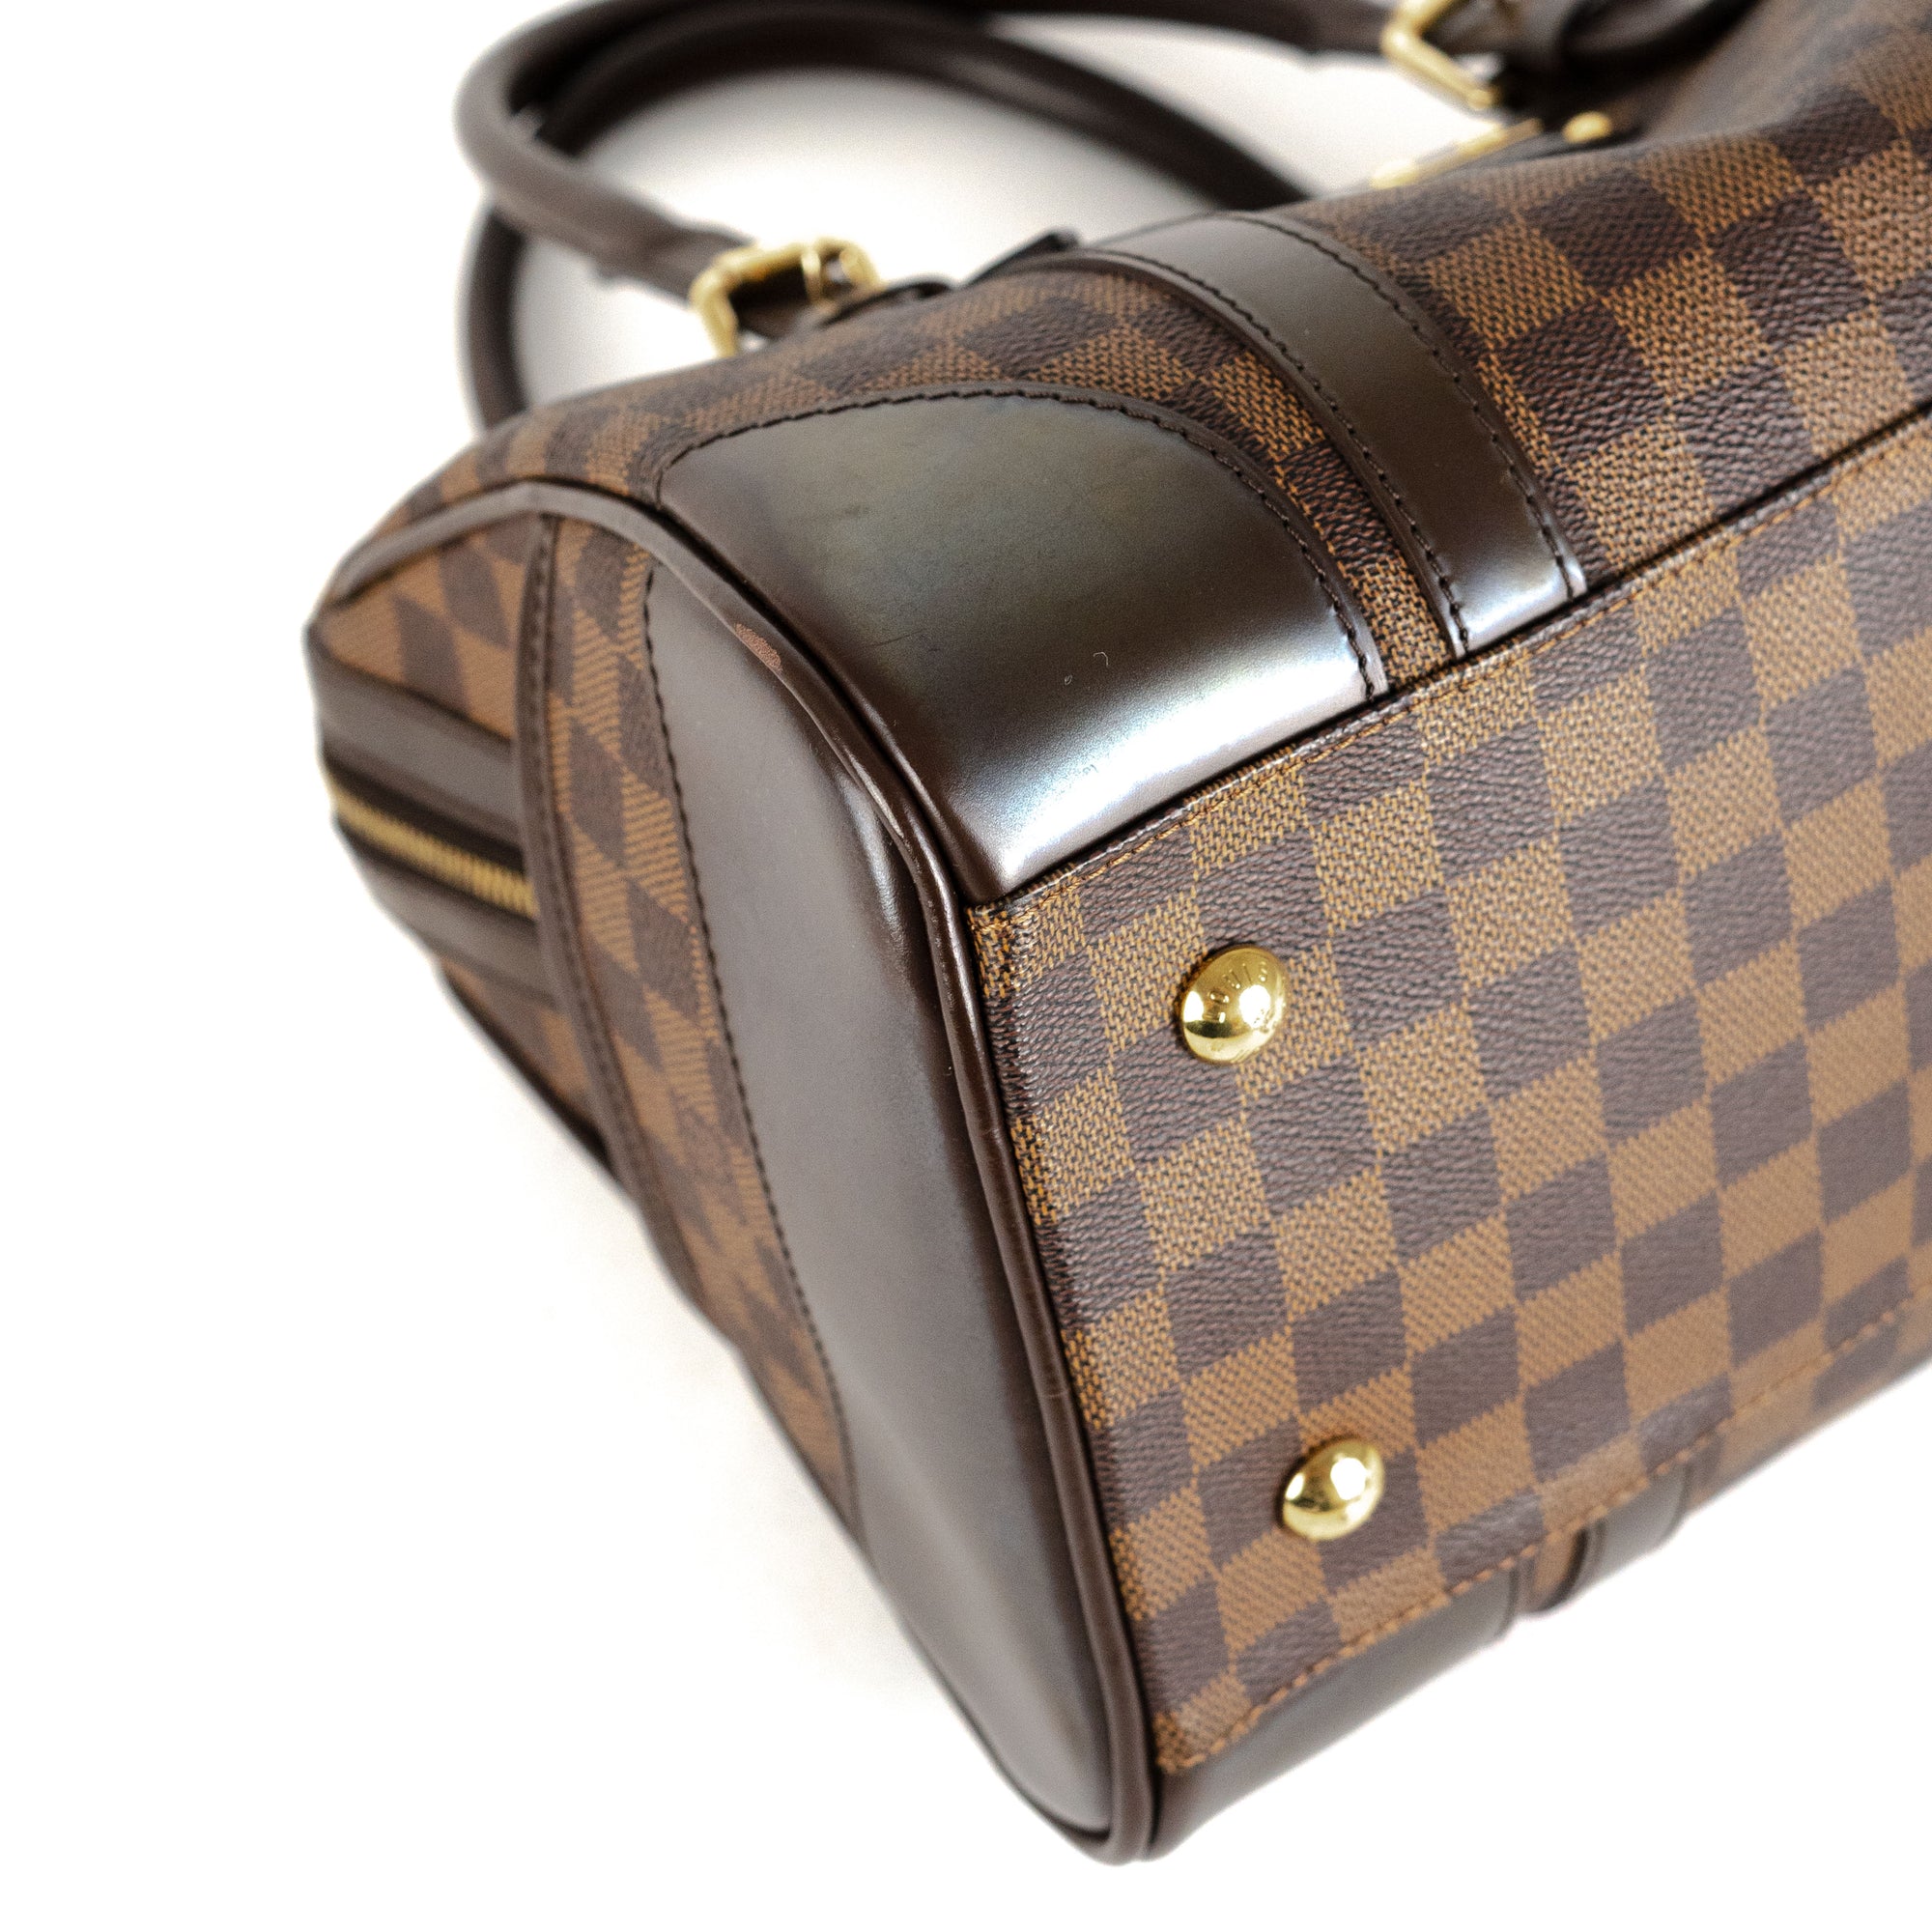 Louis Vuitton Berkeley Handbag 386554